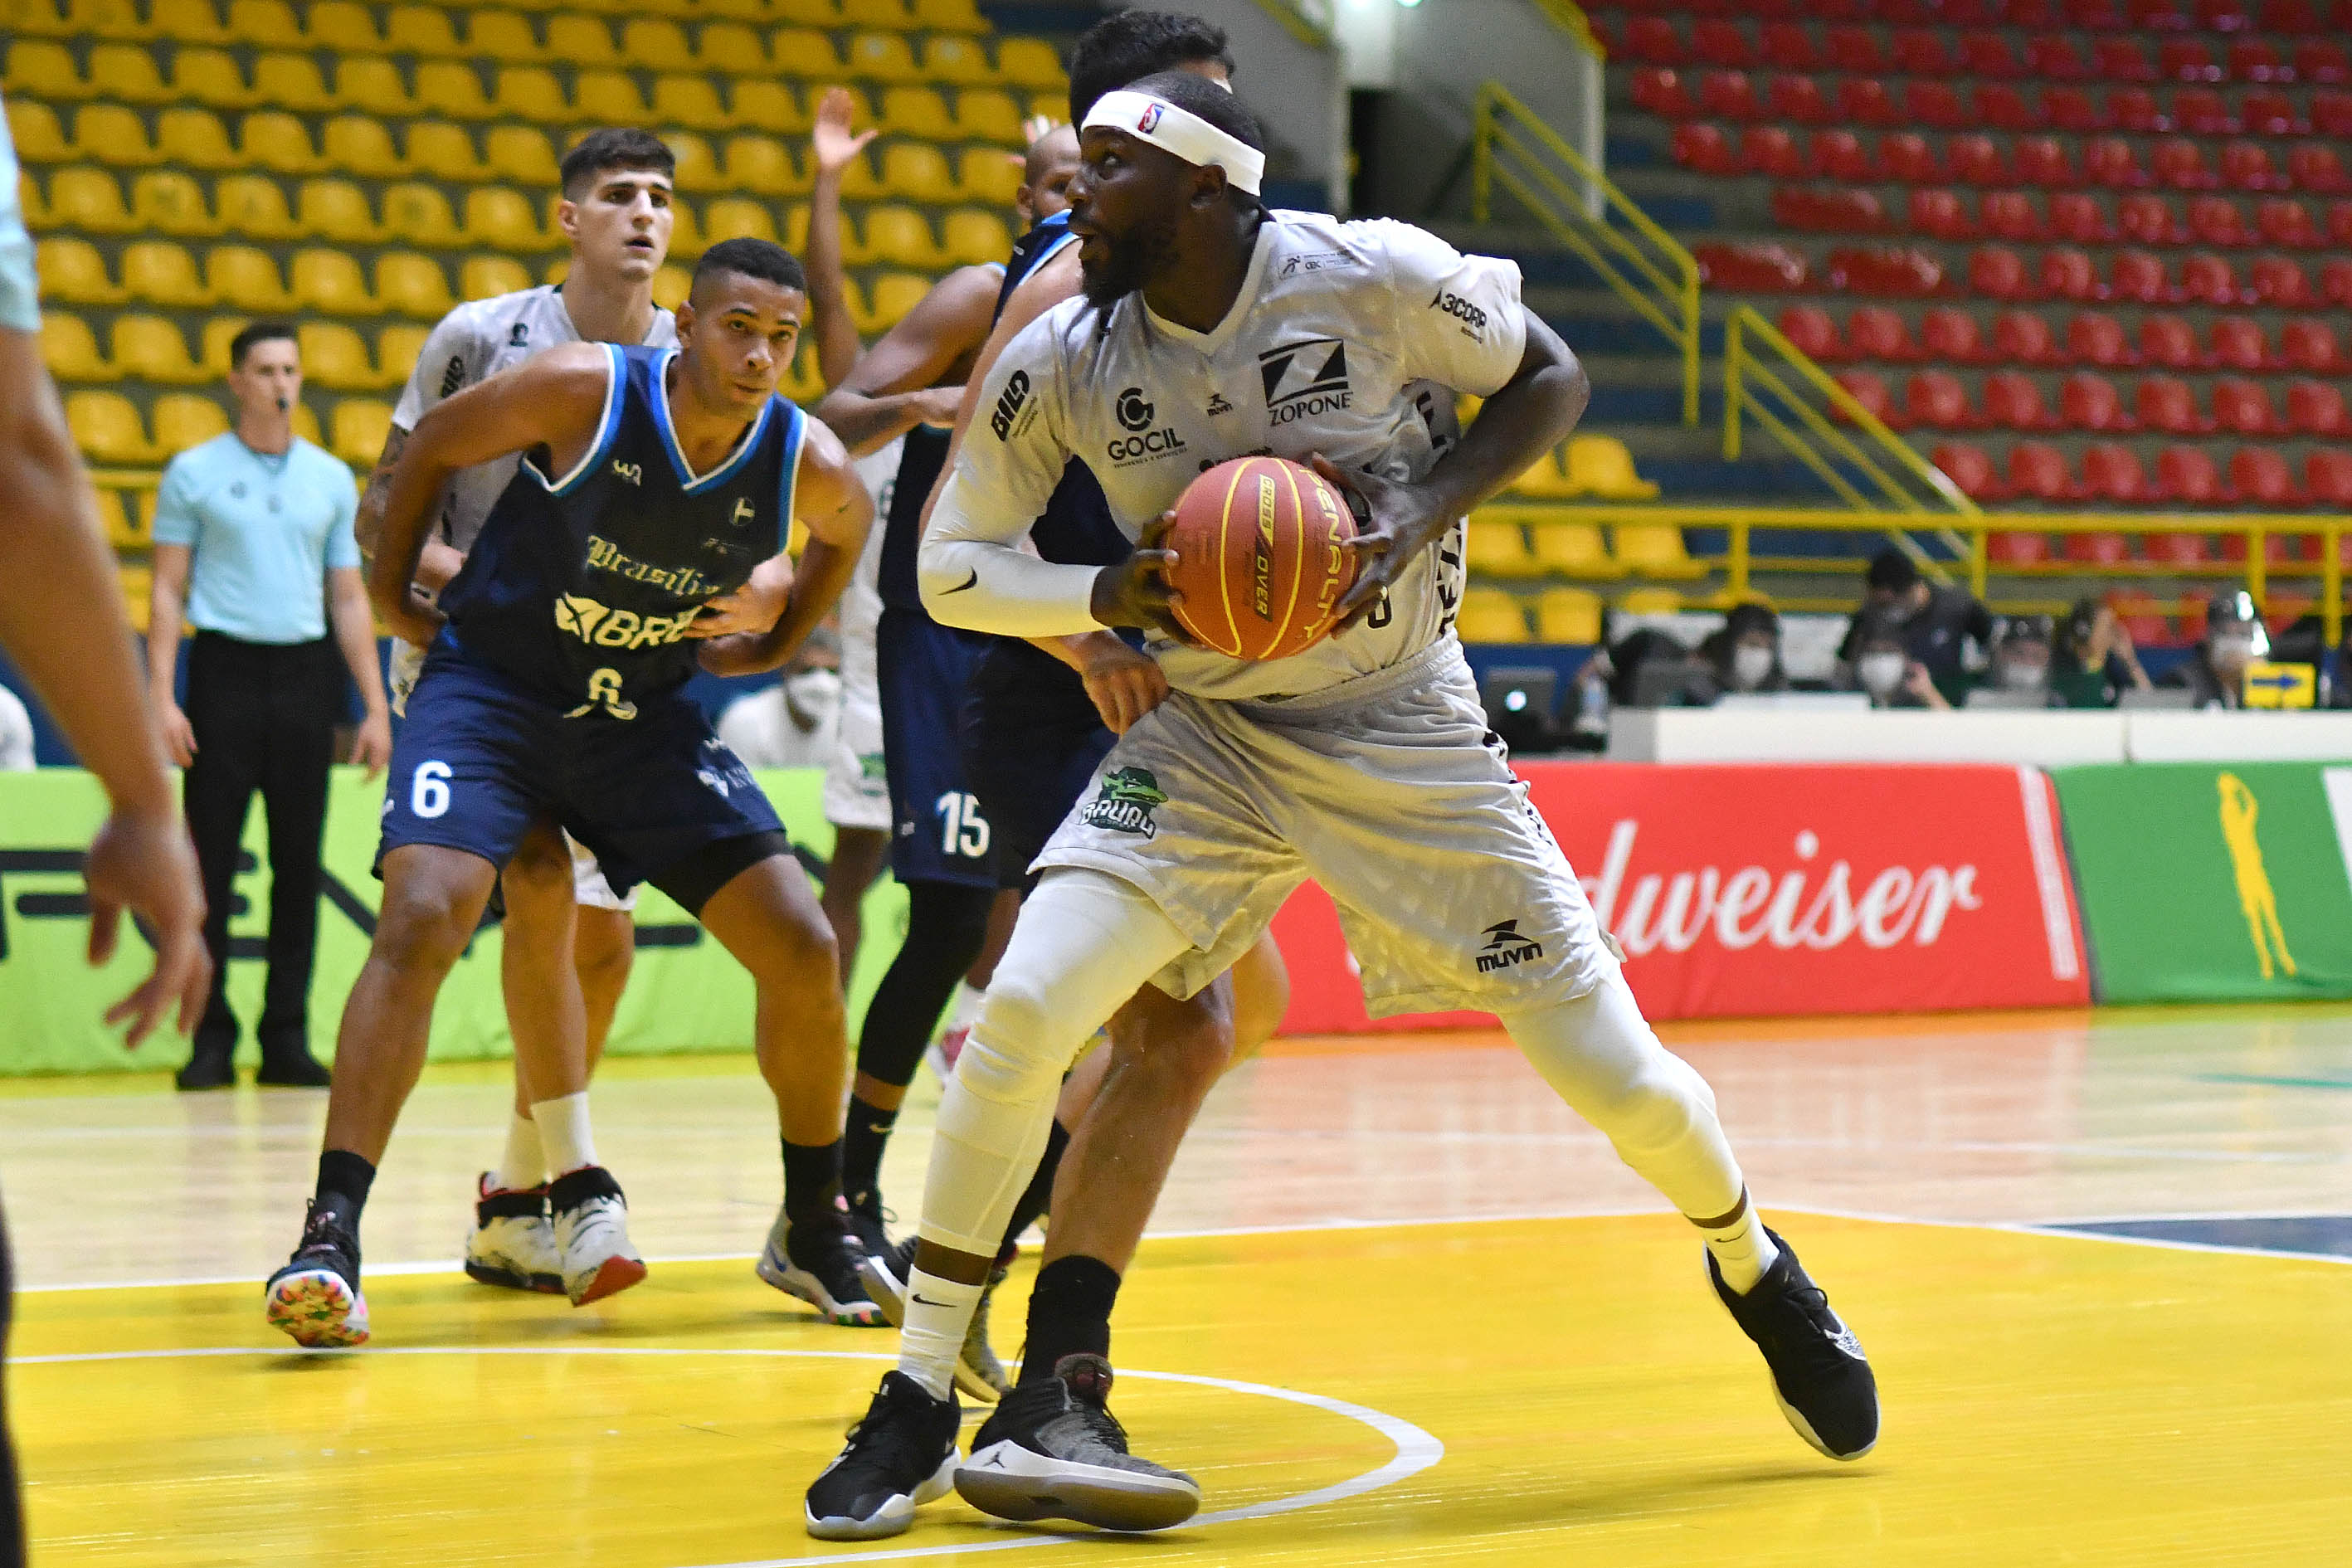 Tyrone Curnell quer o Zopone/Gocil Bauru Basket focado durante os 40 minutos / Foto: João Pires/LNB